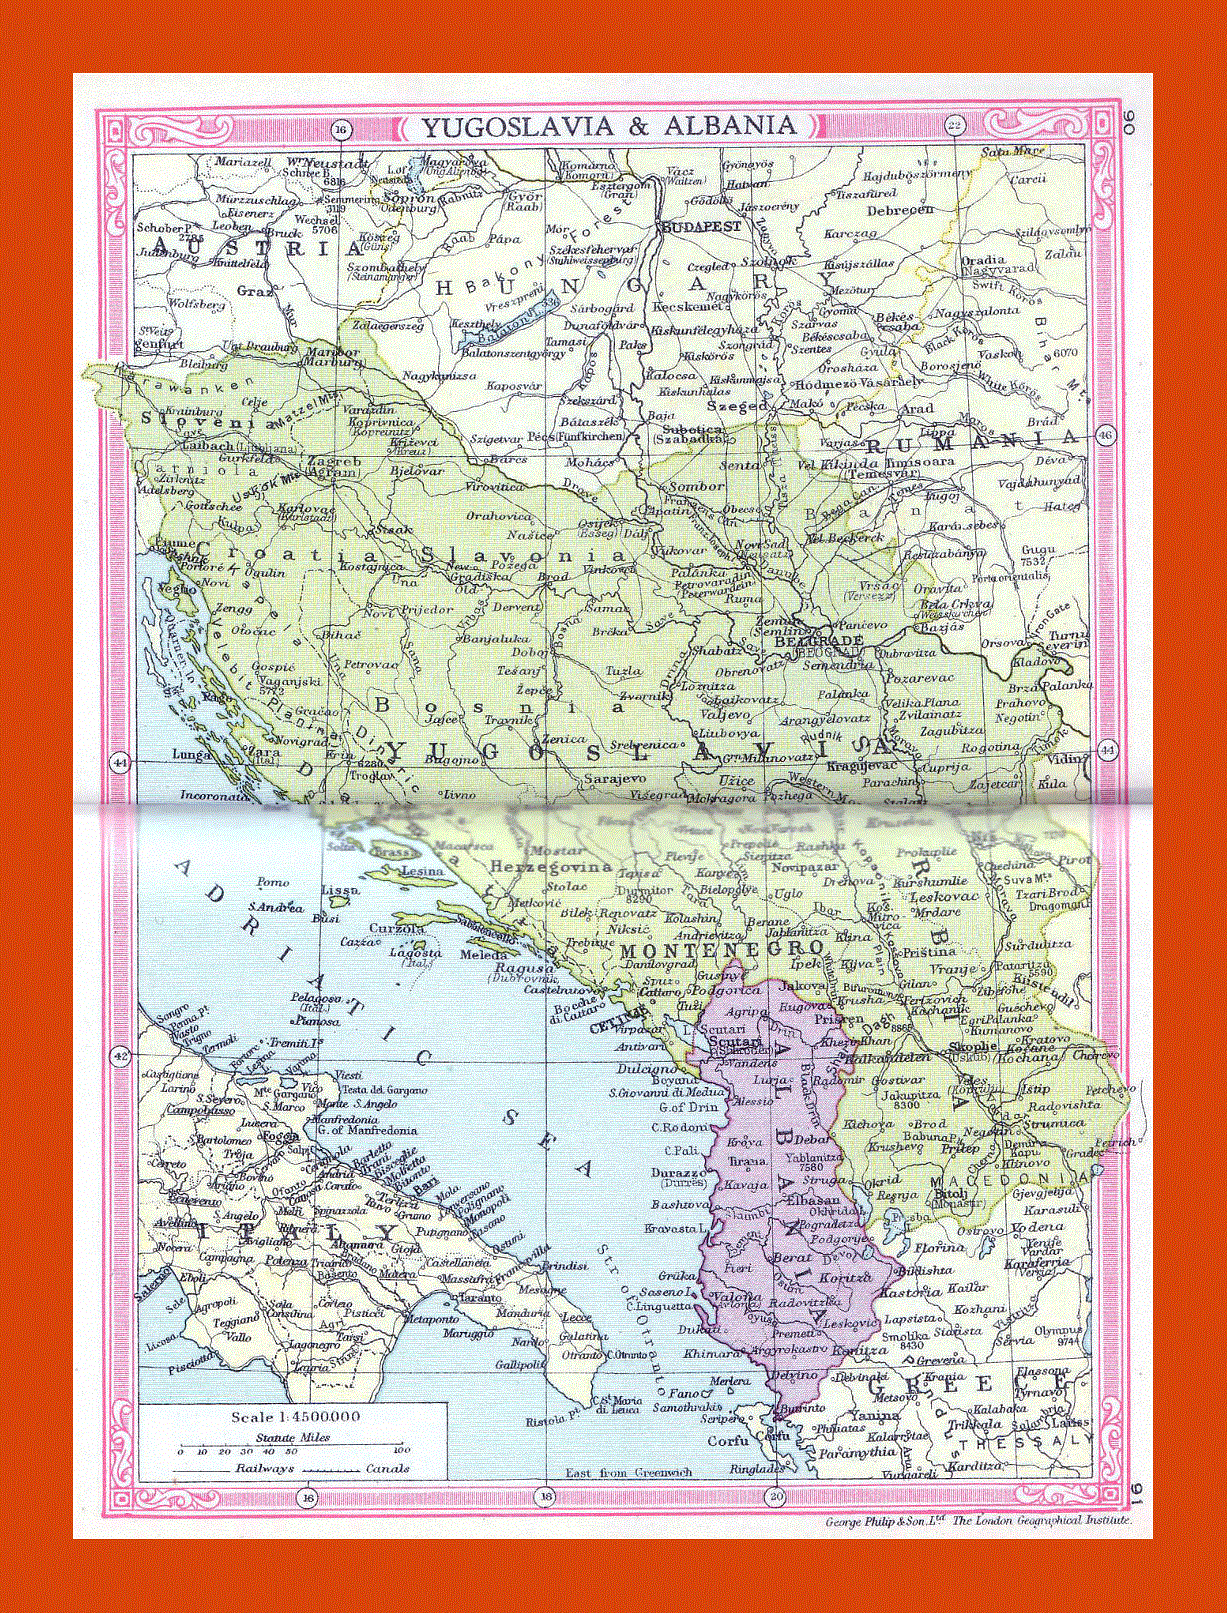 Old map of Yugoslavia and Albania - 1935